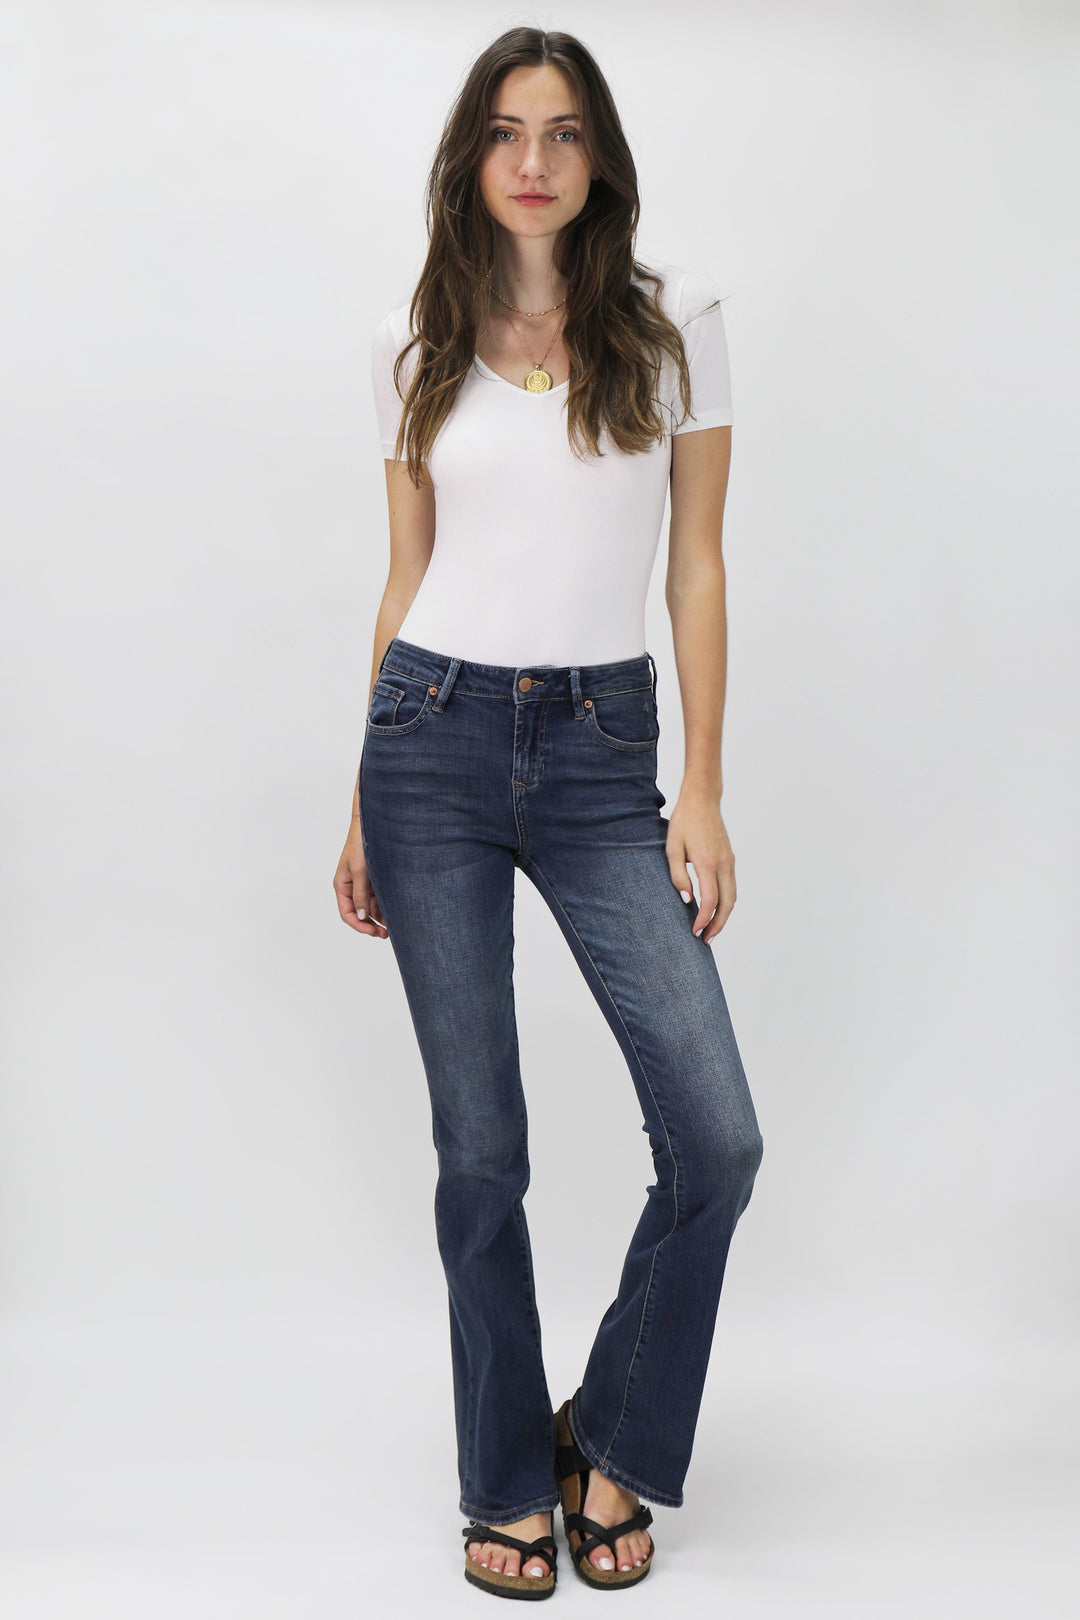 Bootcut Jeans Low Rise - Shop on Pinterest